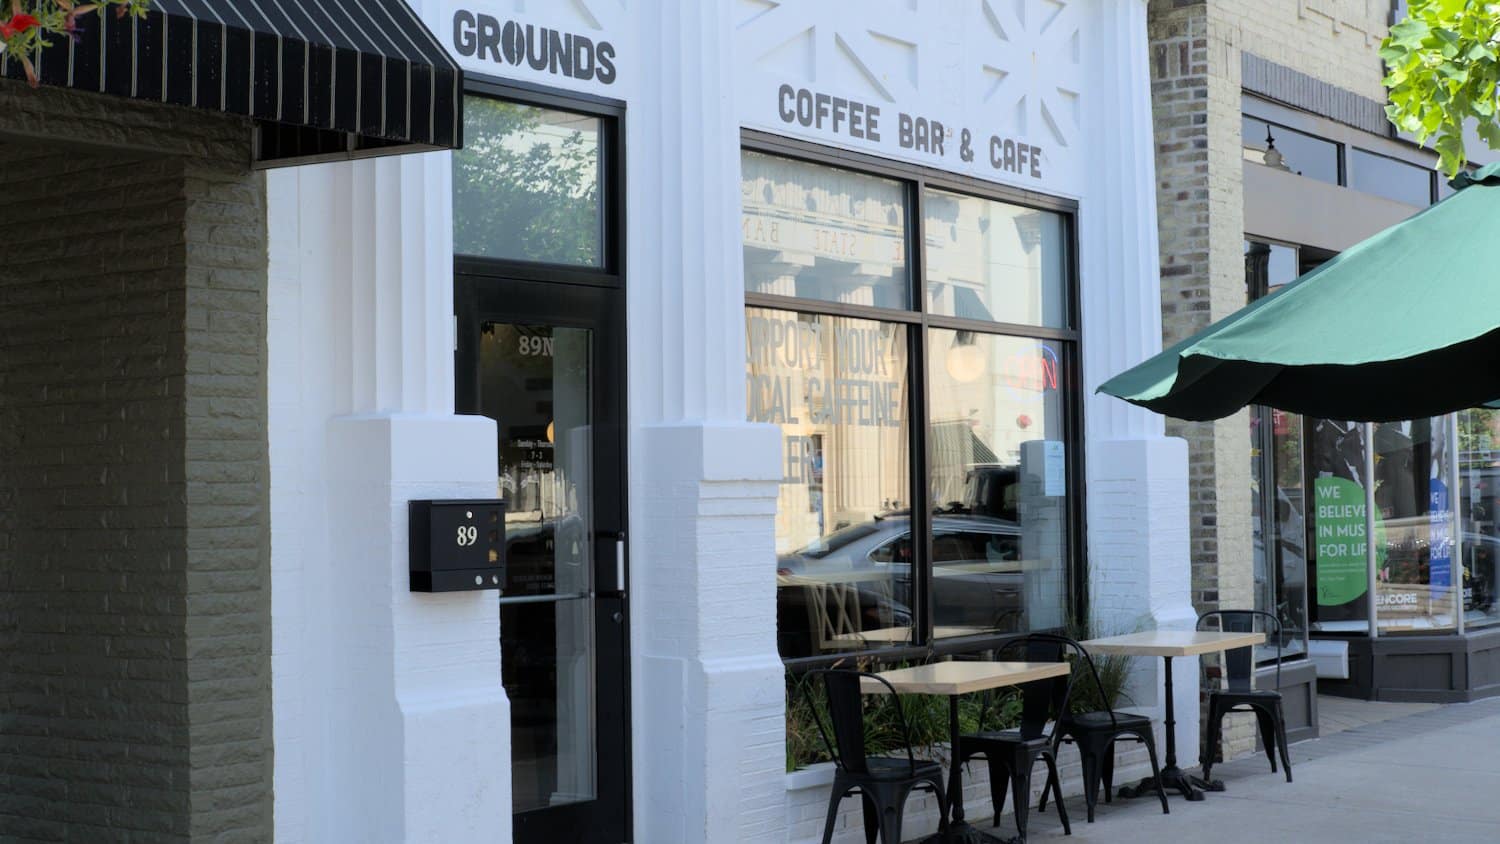 Grounds Coffee Bar & Cafe.